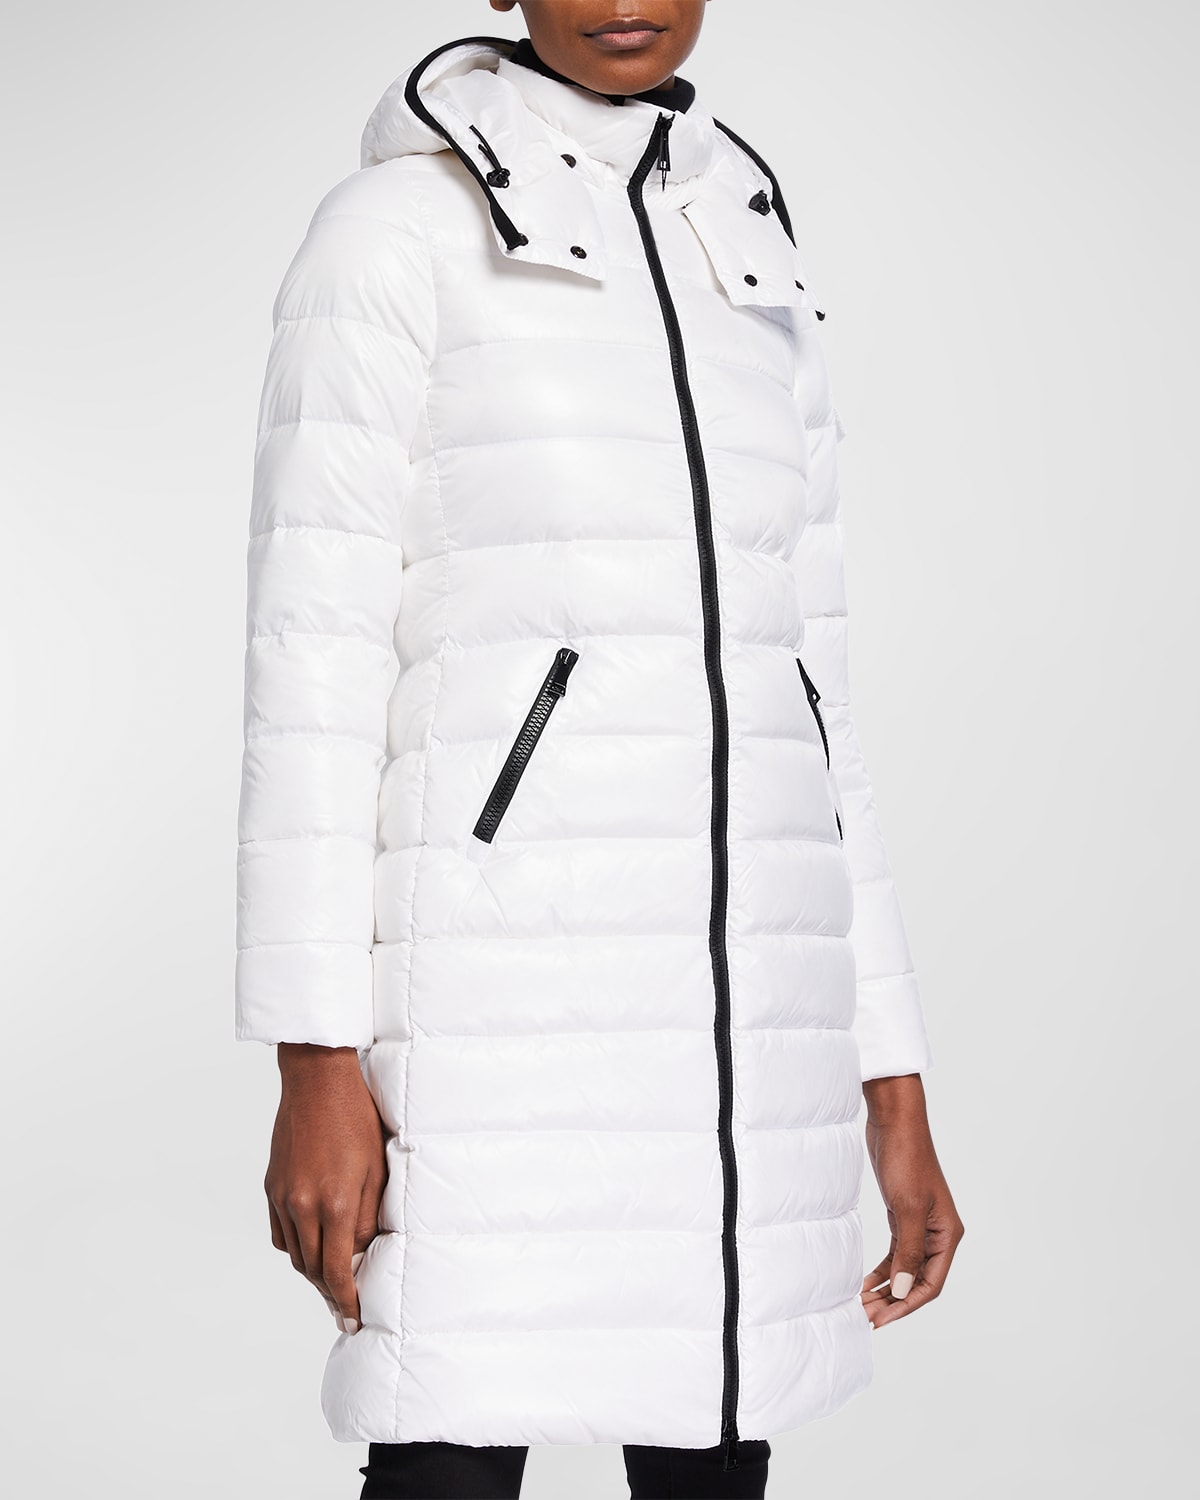 Moka Shiny Fitted Puffer Coat with Hood